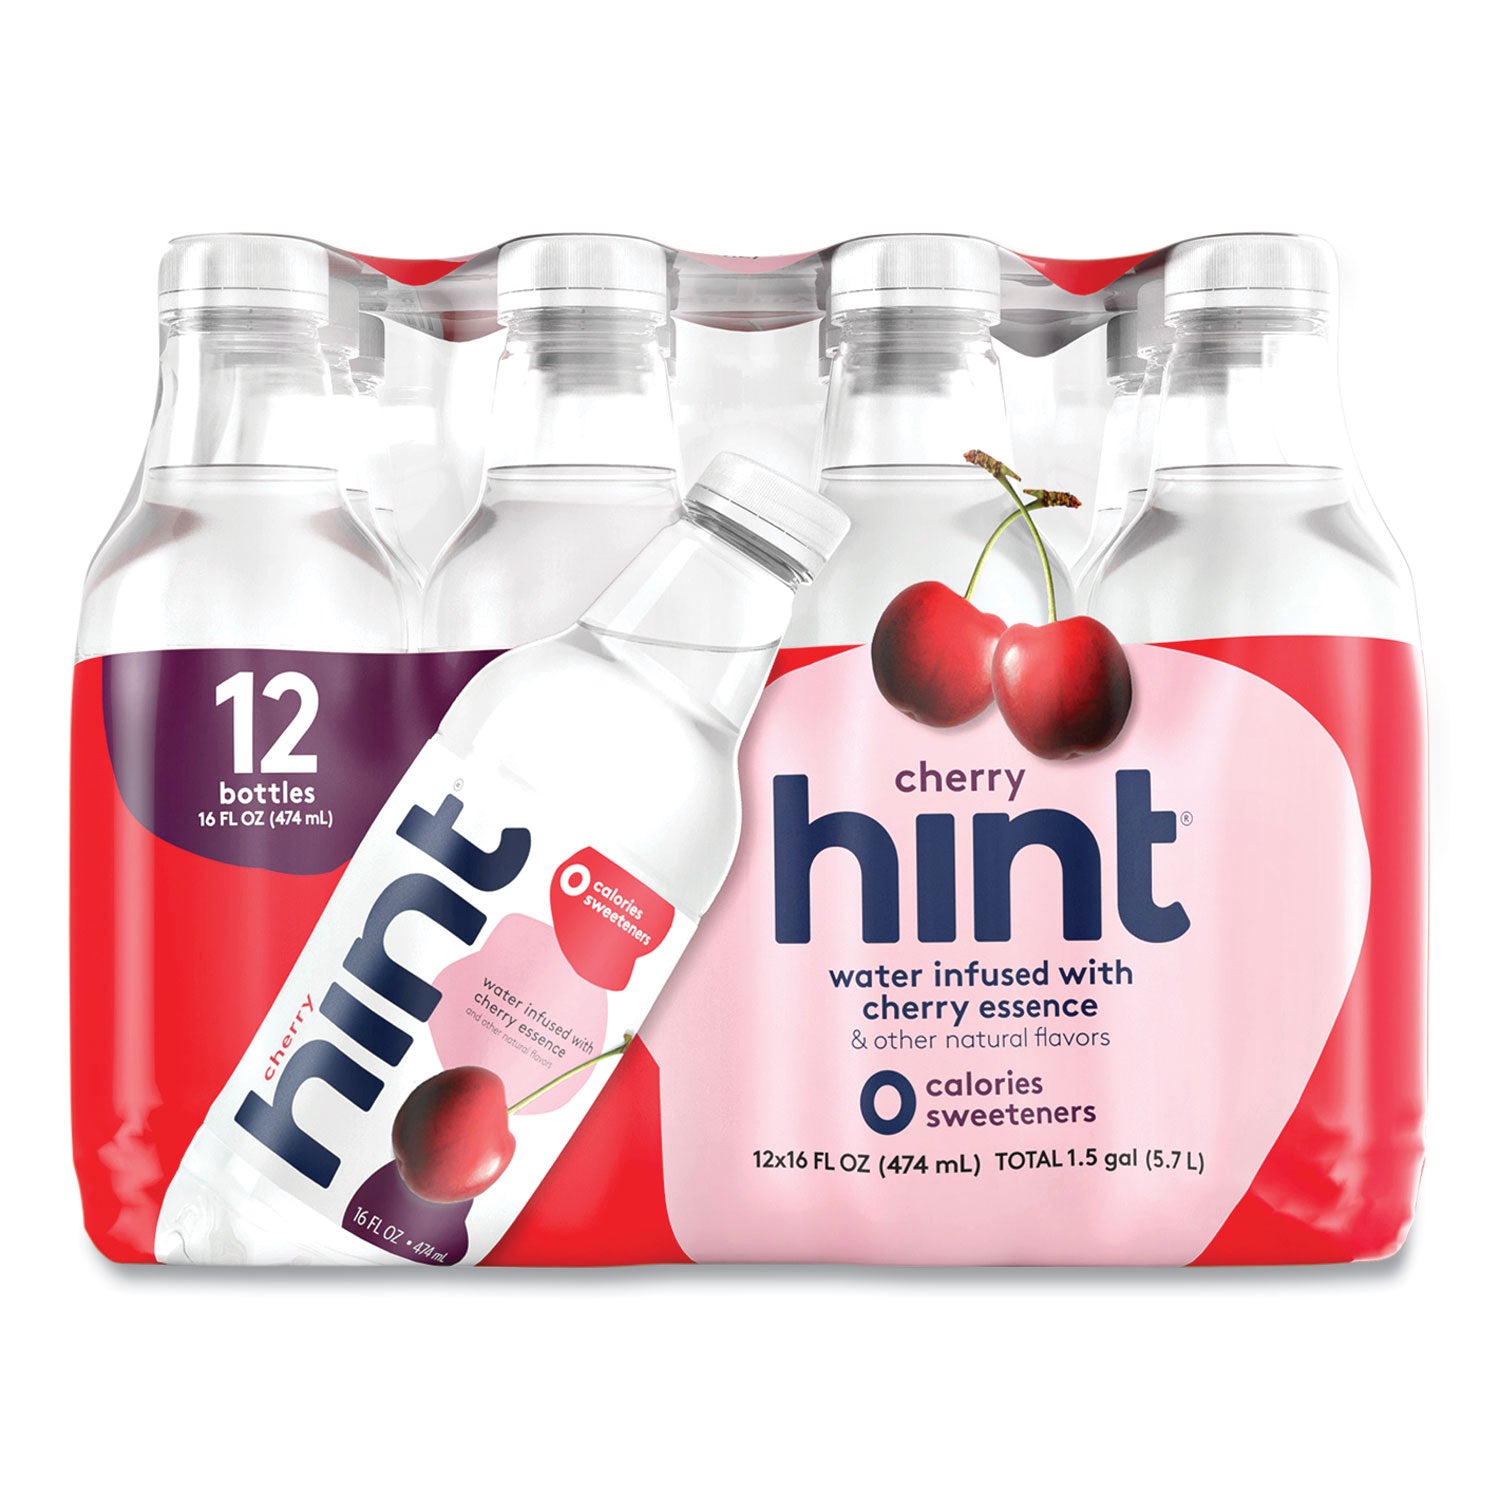 flavored-water-cherry-16-oz-bottle-12-bottles-carton_hin00157 - 2